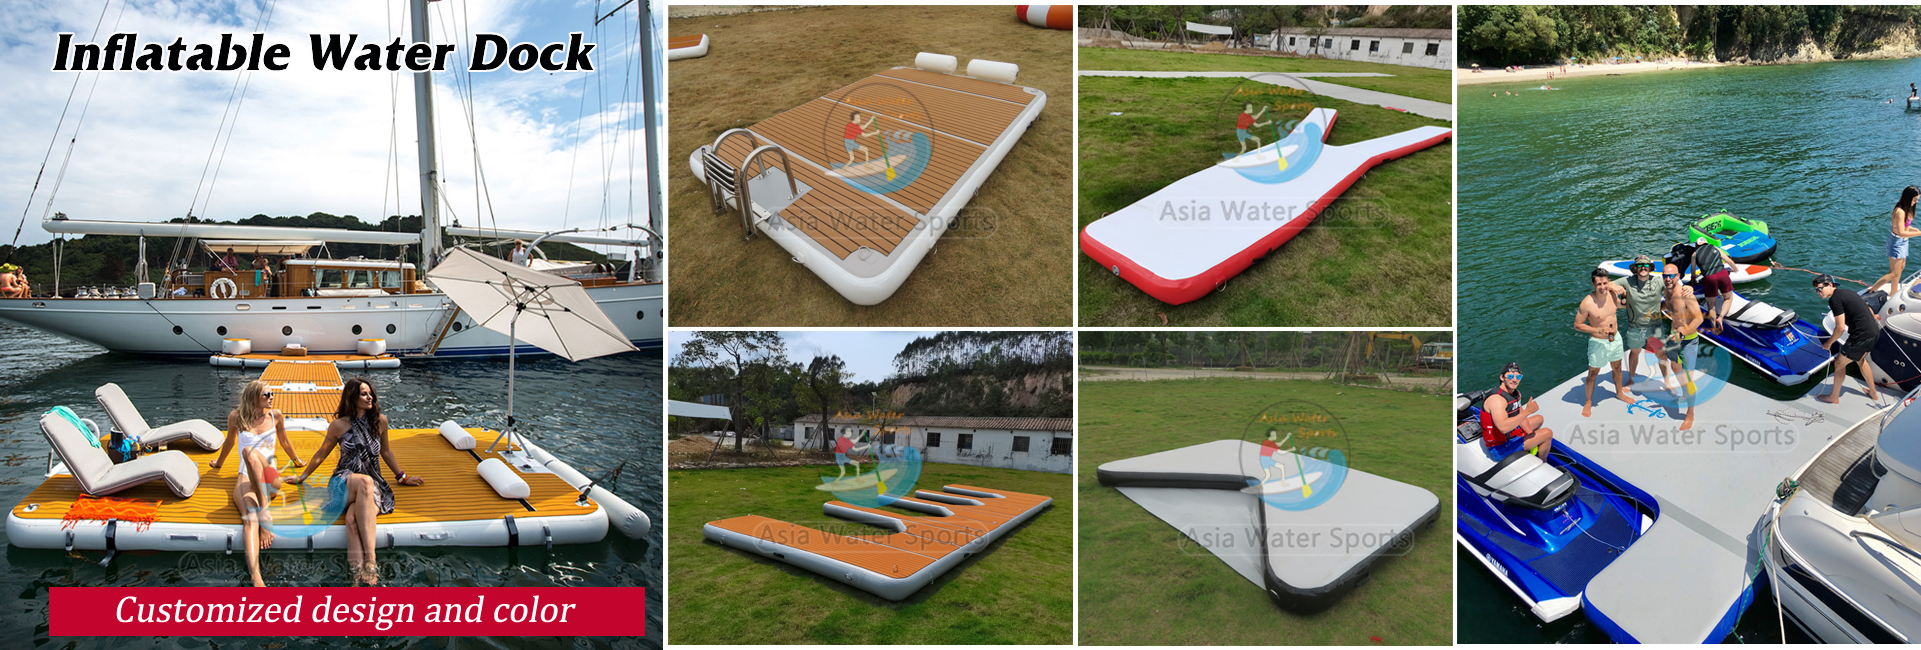 Inflatable floating platform, water platform and Game Pads